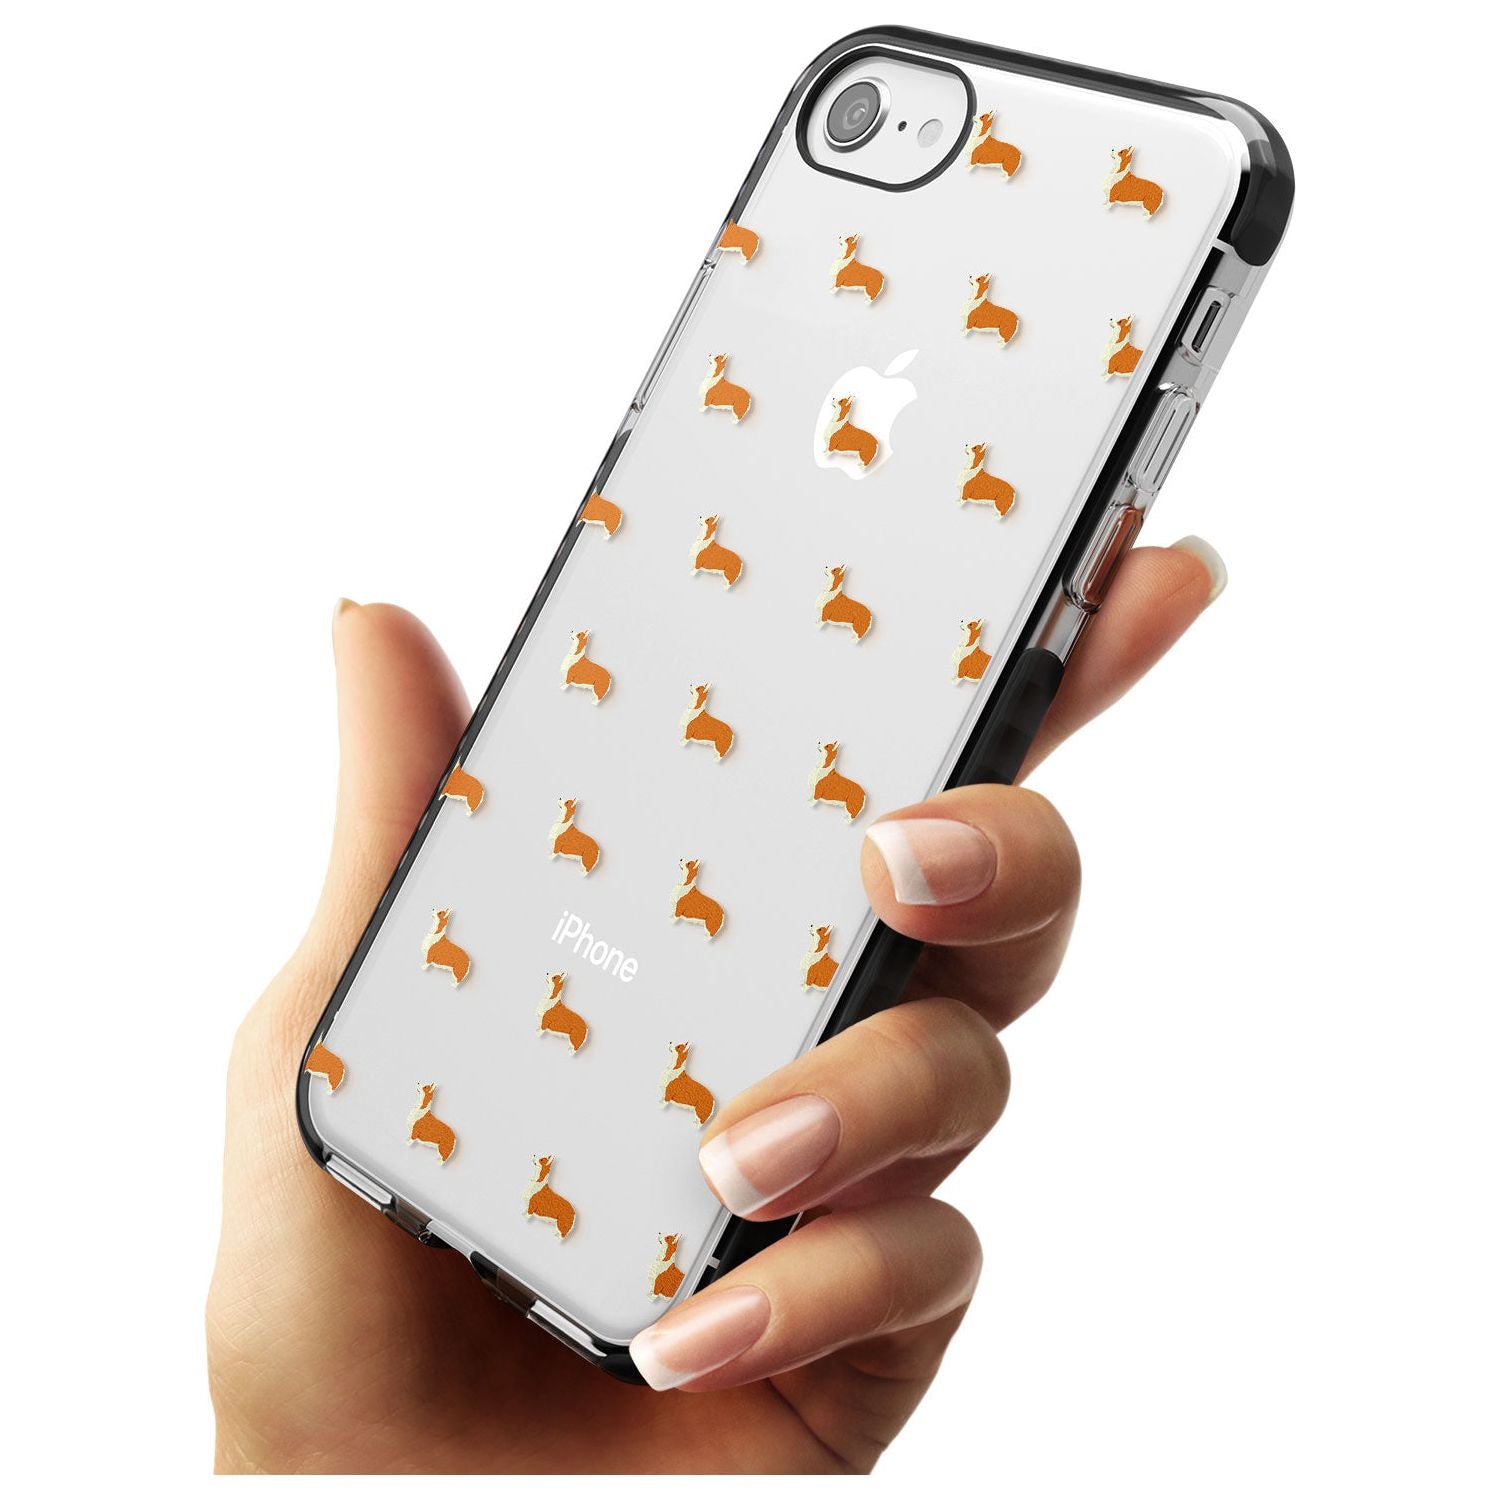 Pembroke Welsh Corgi Dog Pattern Clear Black Impact Phone Case for iPhone SE 8 7 Plus